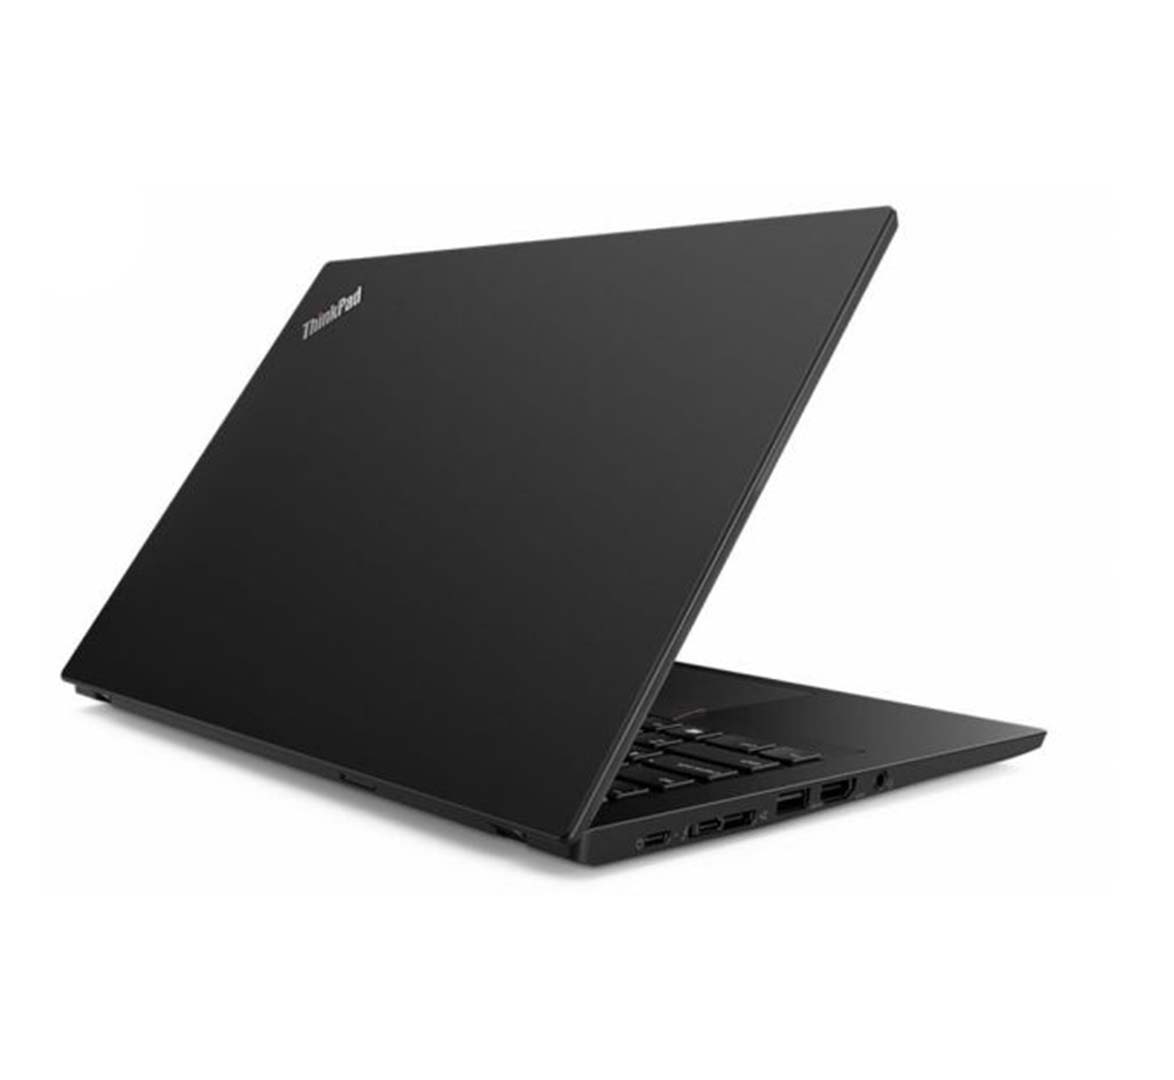 Lenovo ThinkPad X280 Business Laptop, Intel Core i7-8th Gen CPU, 16GB RAM, 256GB SSD, 12.5 inch Touchscreen, Windows 10 Pro